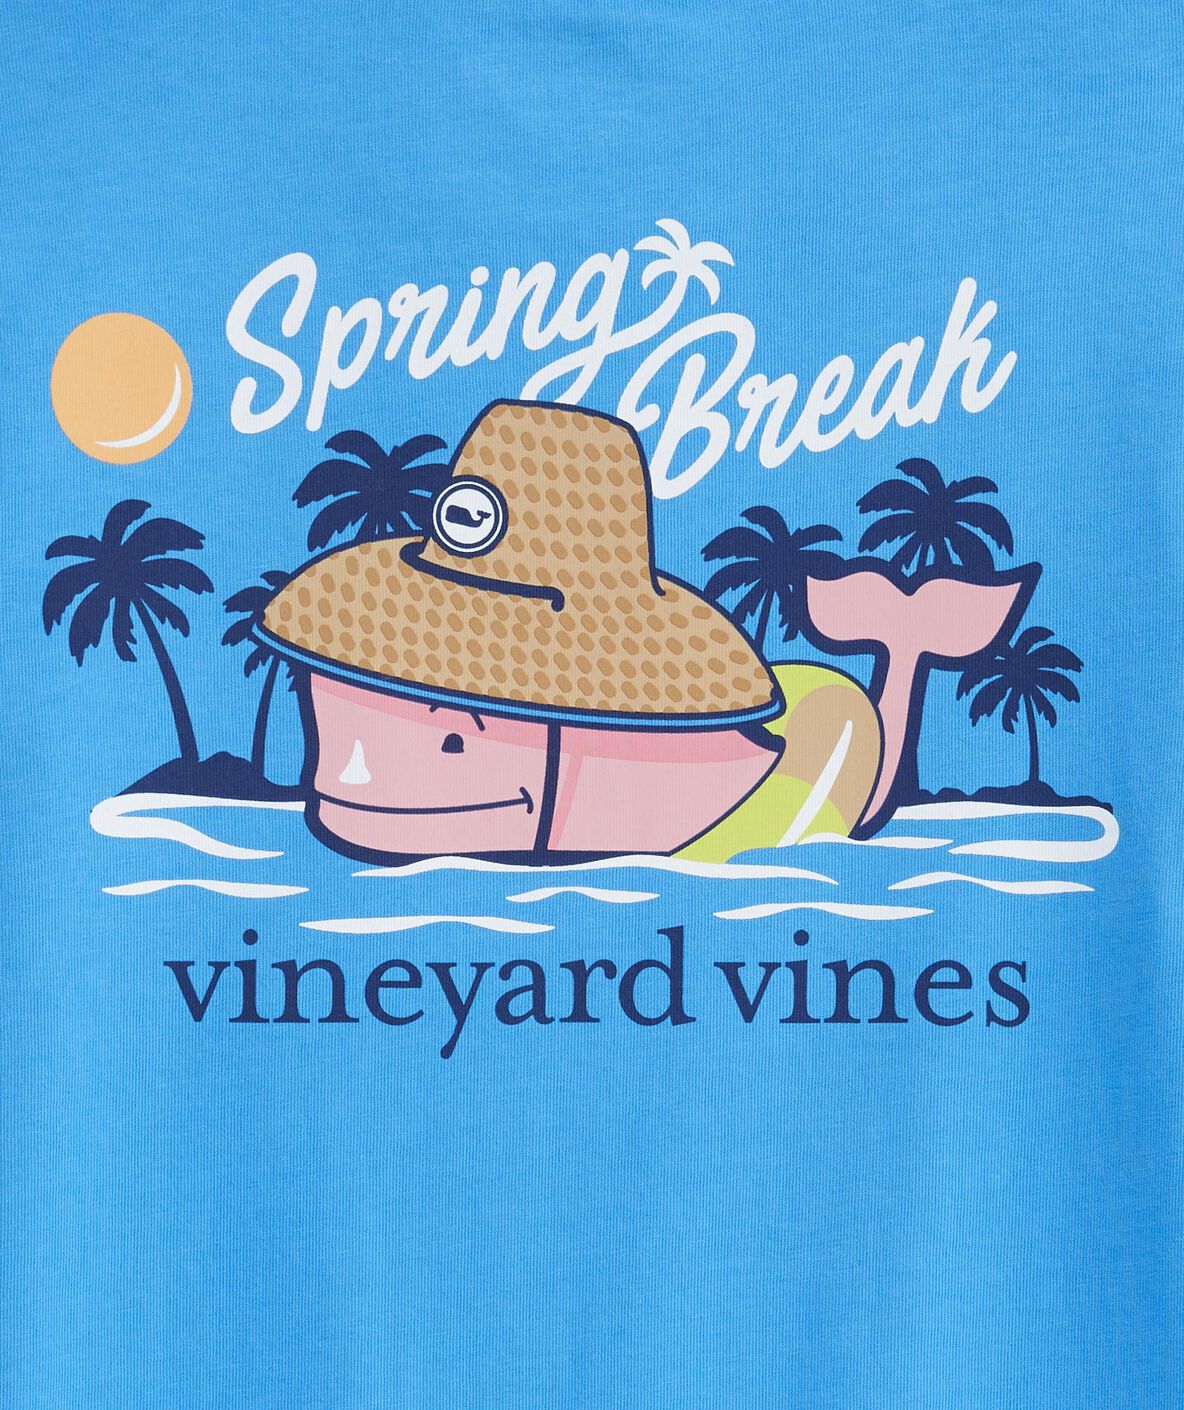 Vineyard Vines Short-Sleeve Graduation Whale T-Shirt (Newport Blue